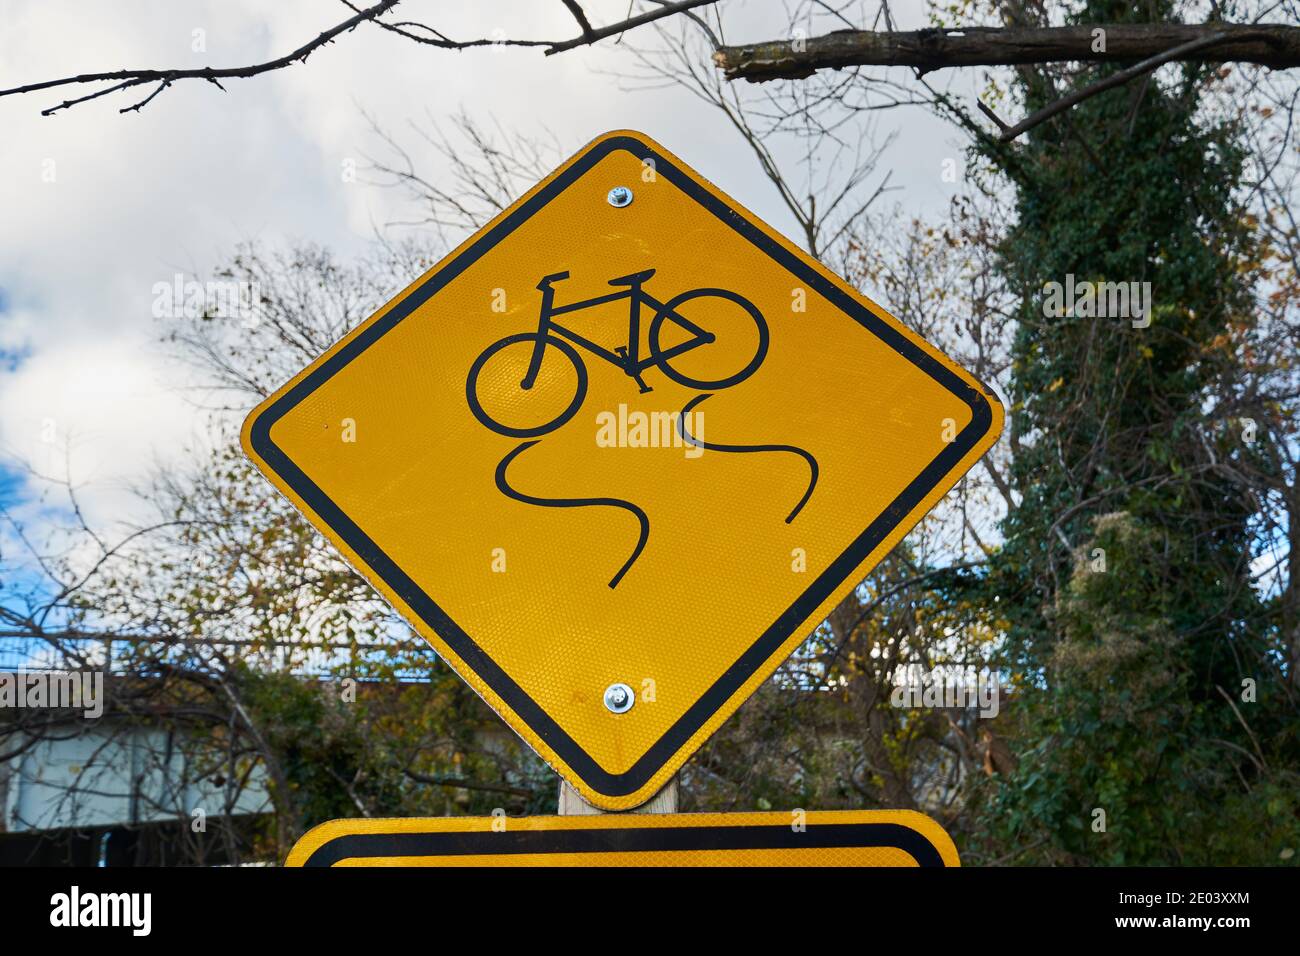 Yellow Diamond-Shaped Warning Road Signs